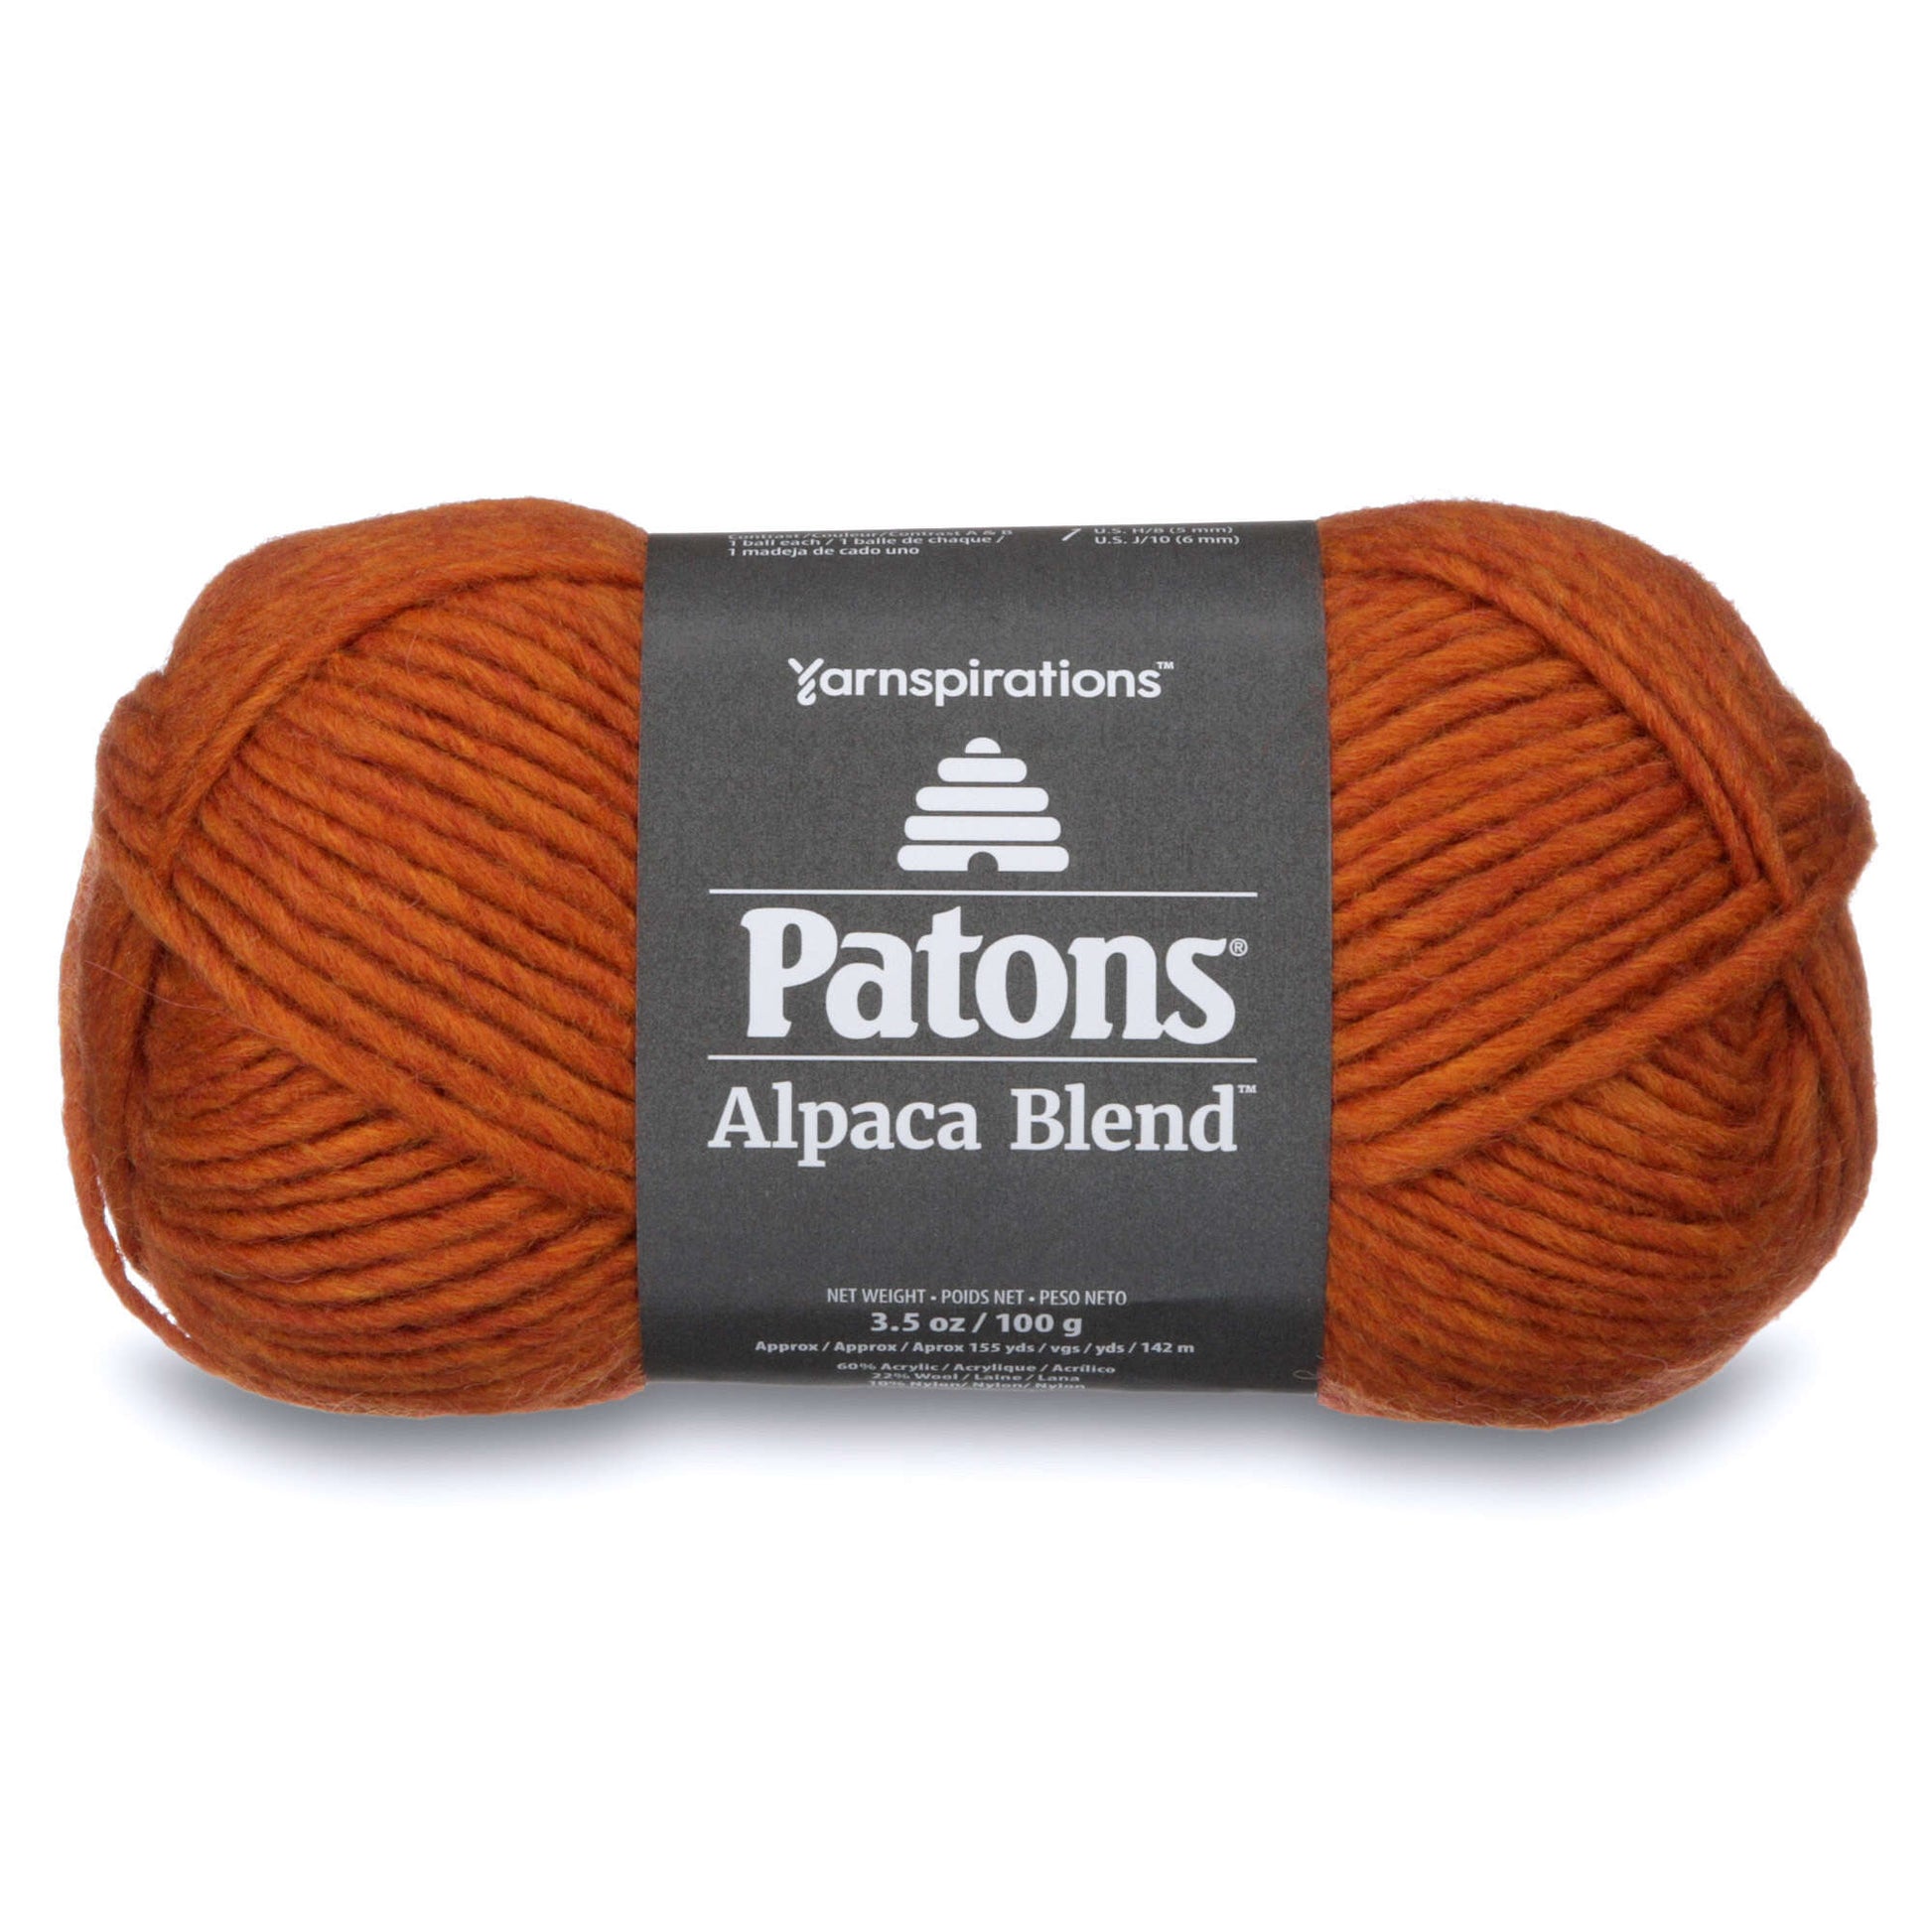 Patons Alpaca Blend Yarn - Discontinued Shades Yam